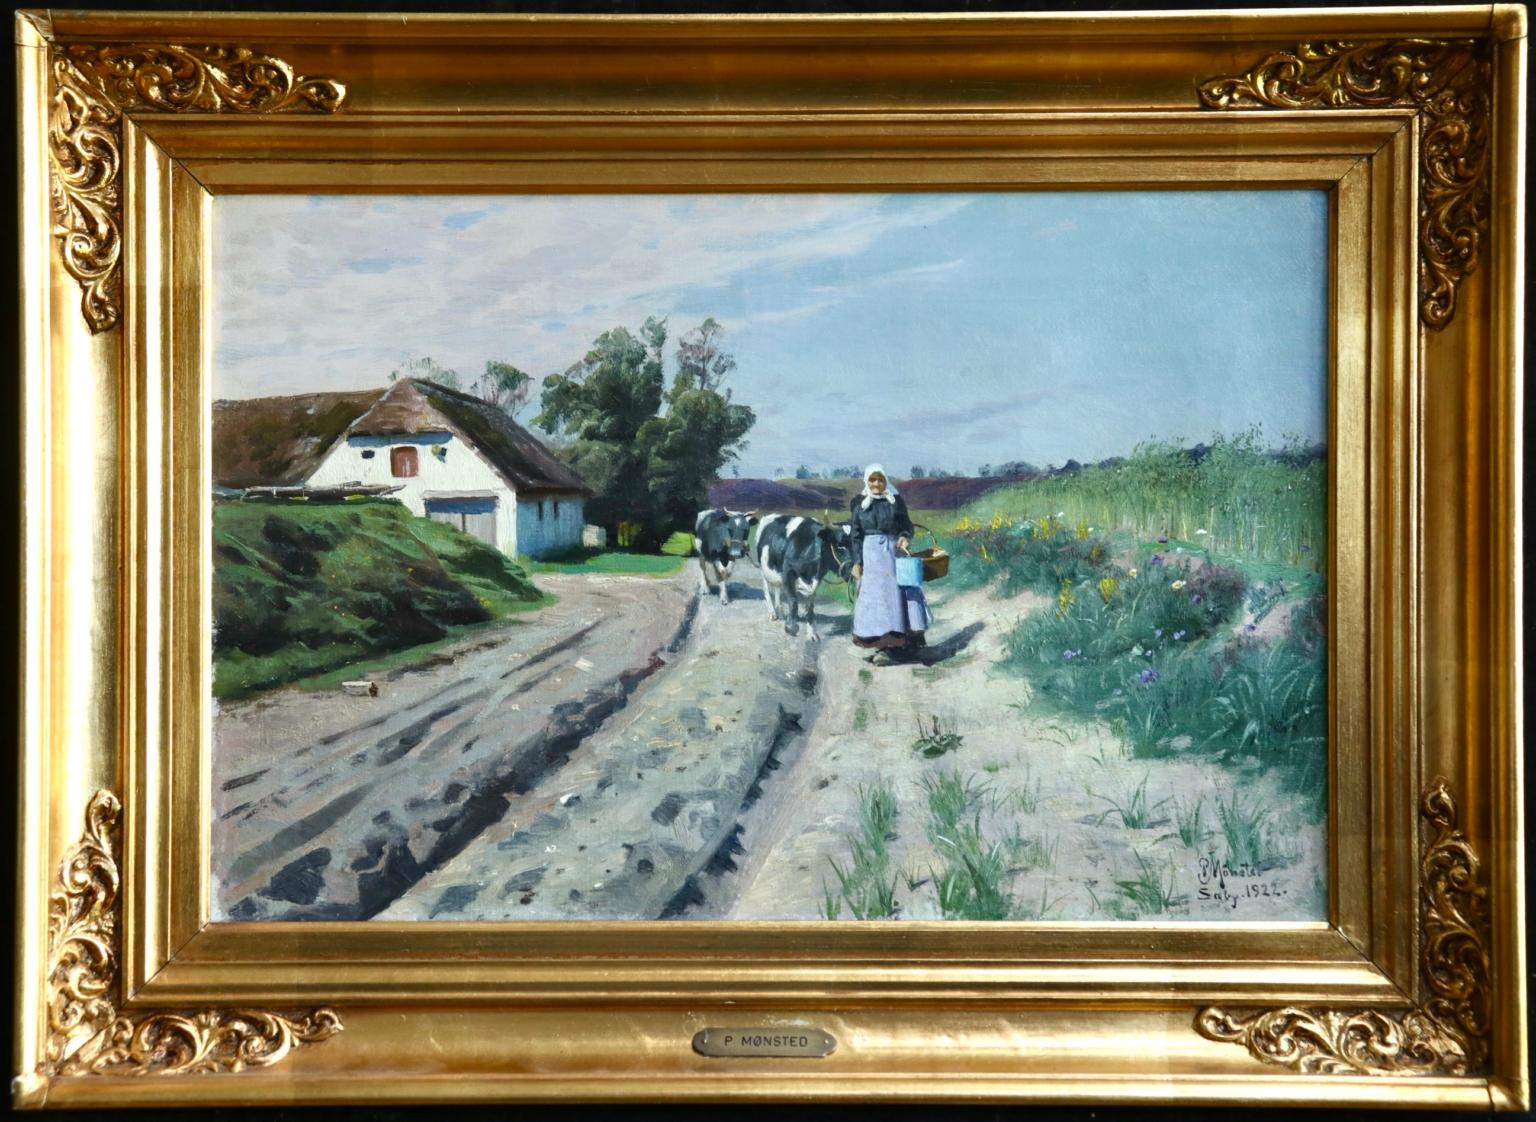 Milking Time-Saeby, Jutland - Realist Oil, Cattle in Summer Landscape by Mønsted - Painting by Peder Mørk Mønsted